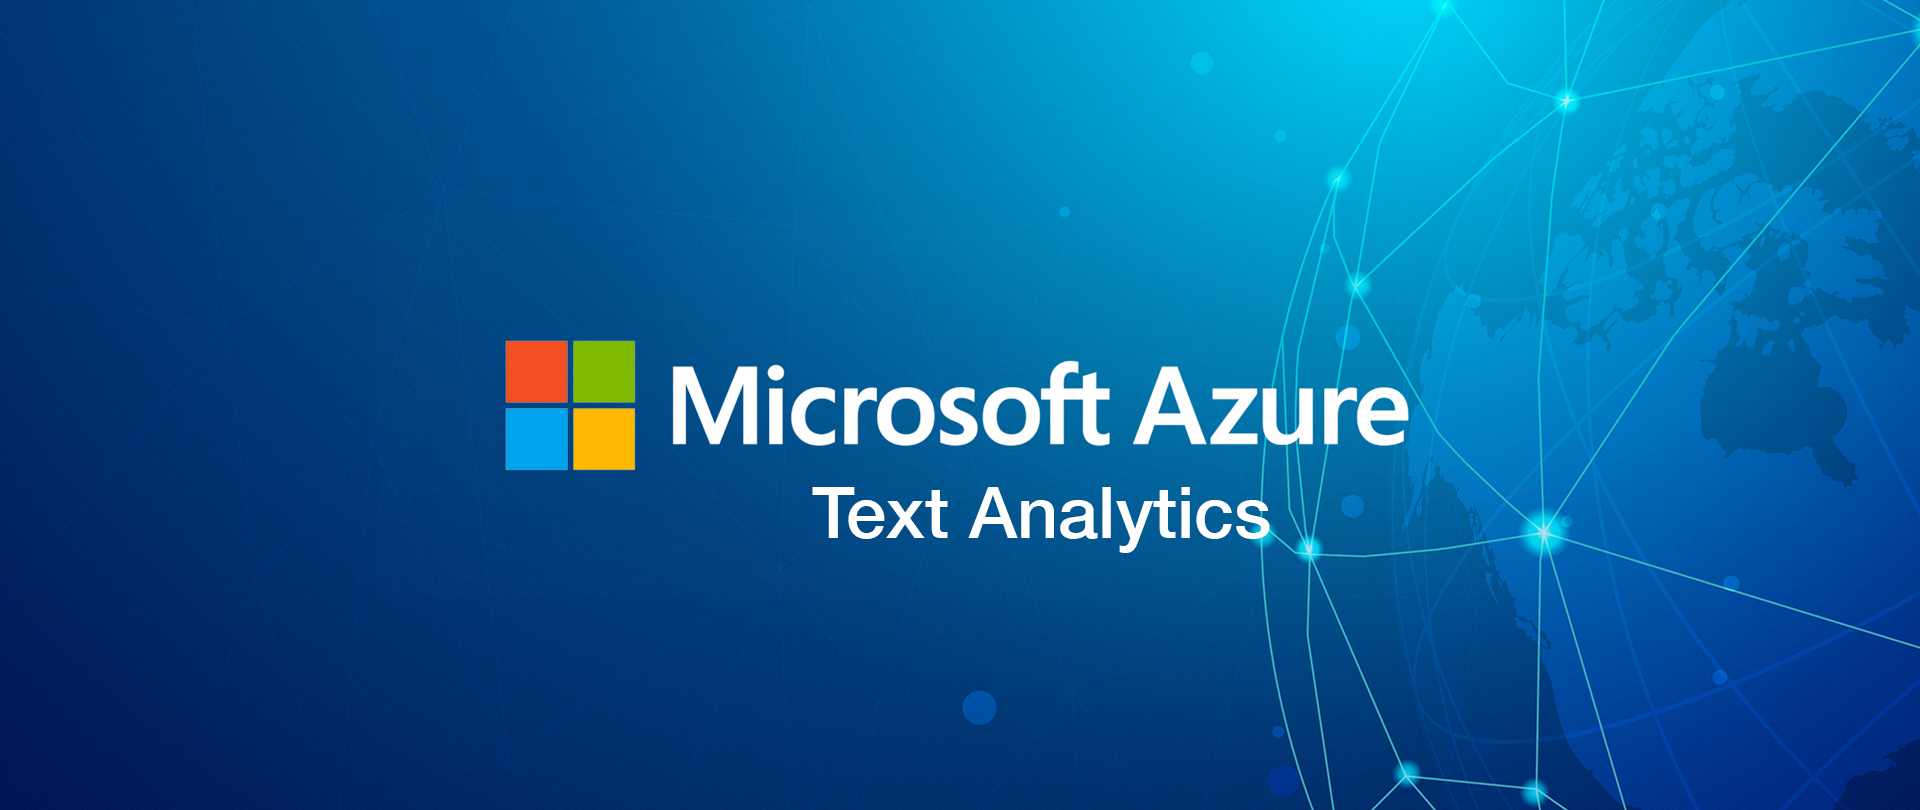 Azure Cognitive Services - Text Analytics